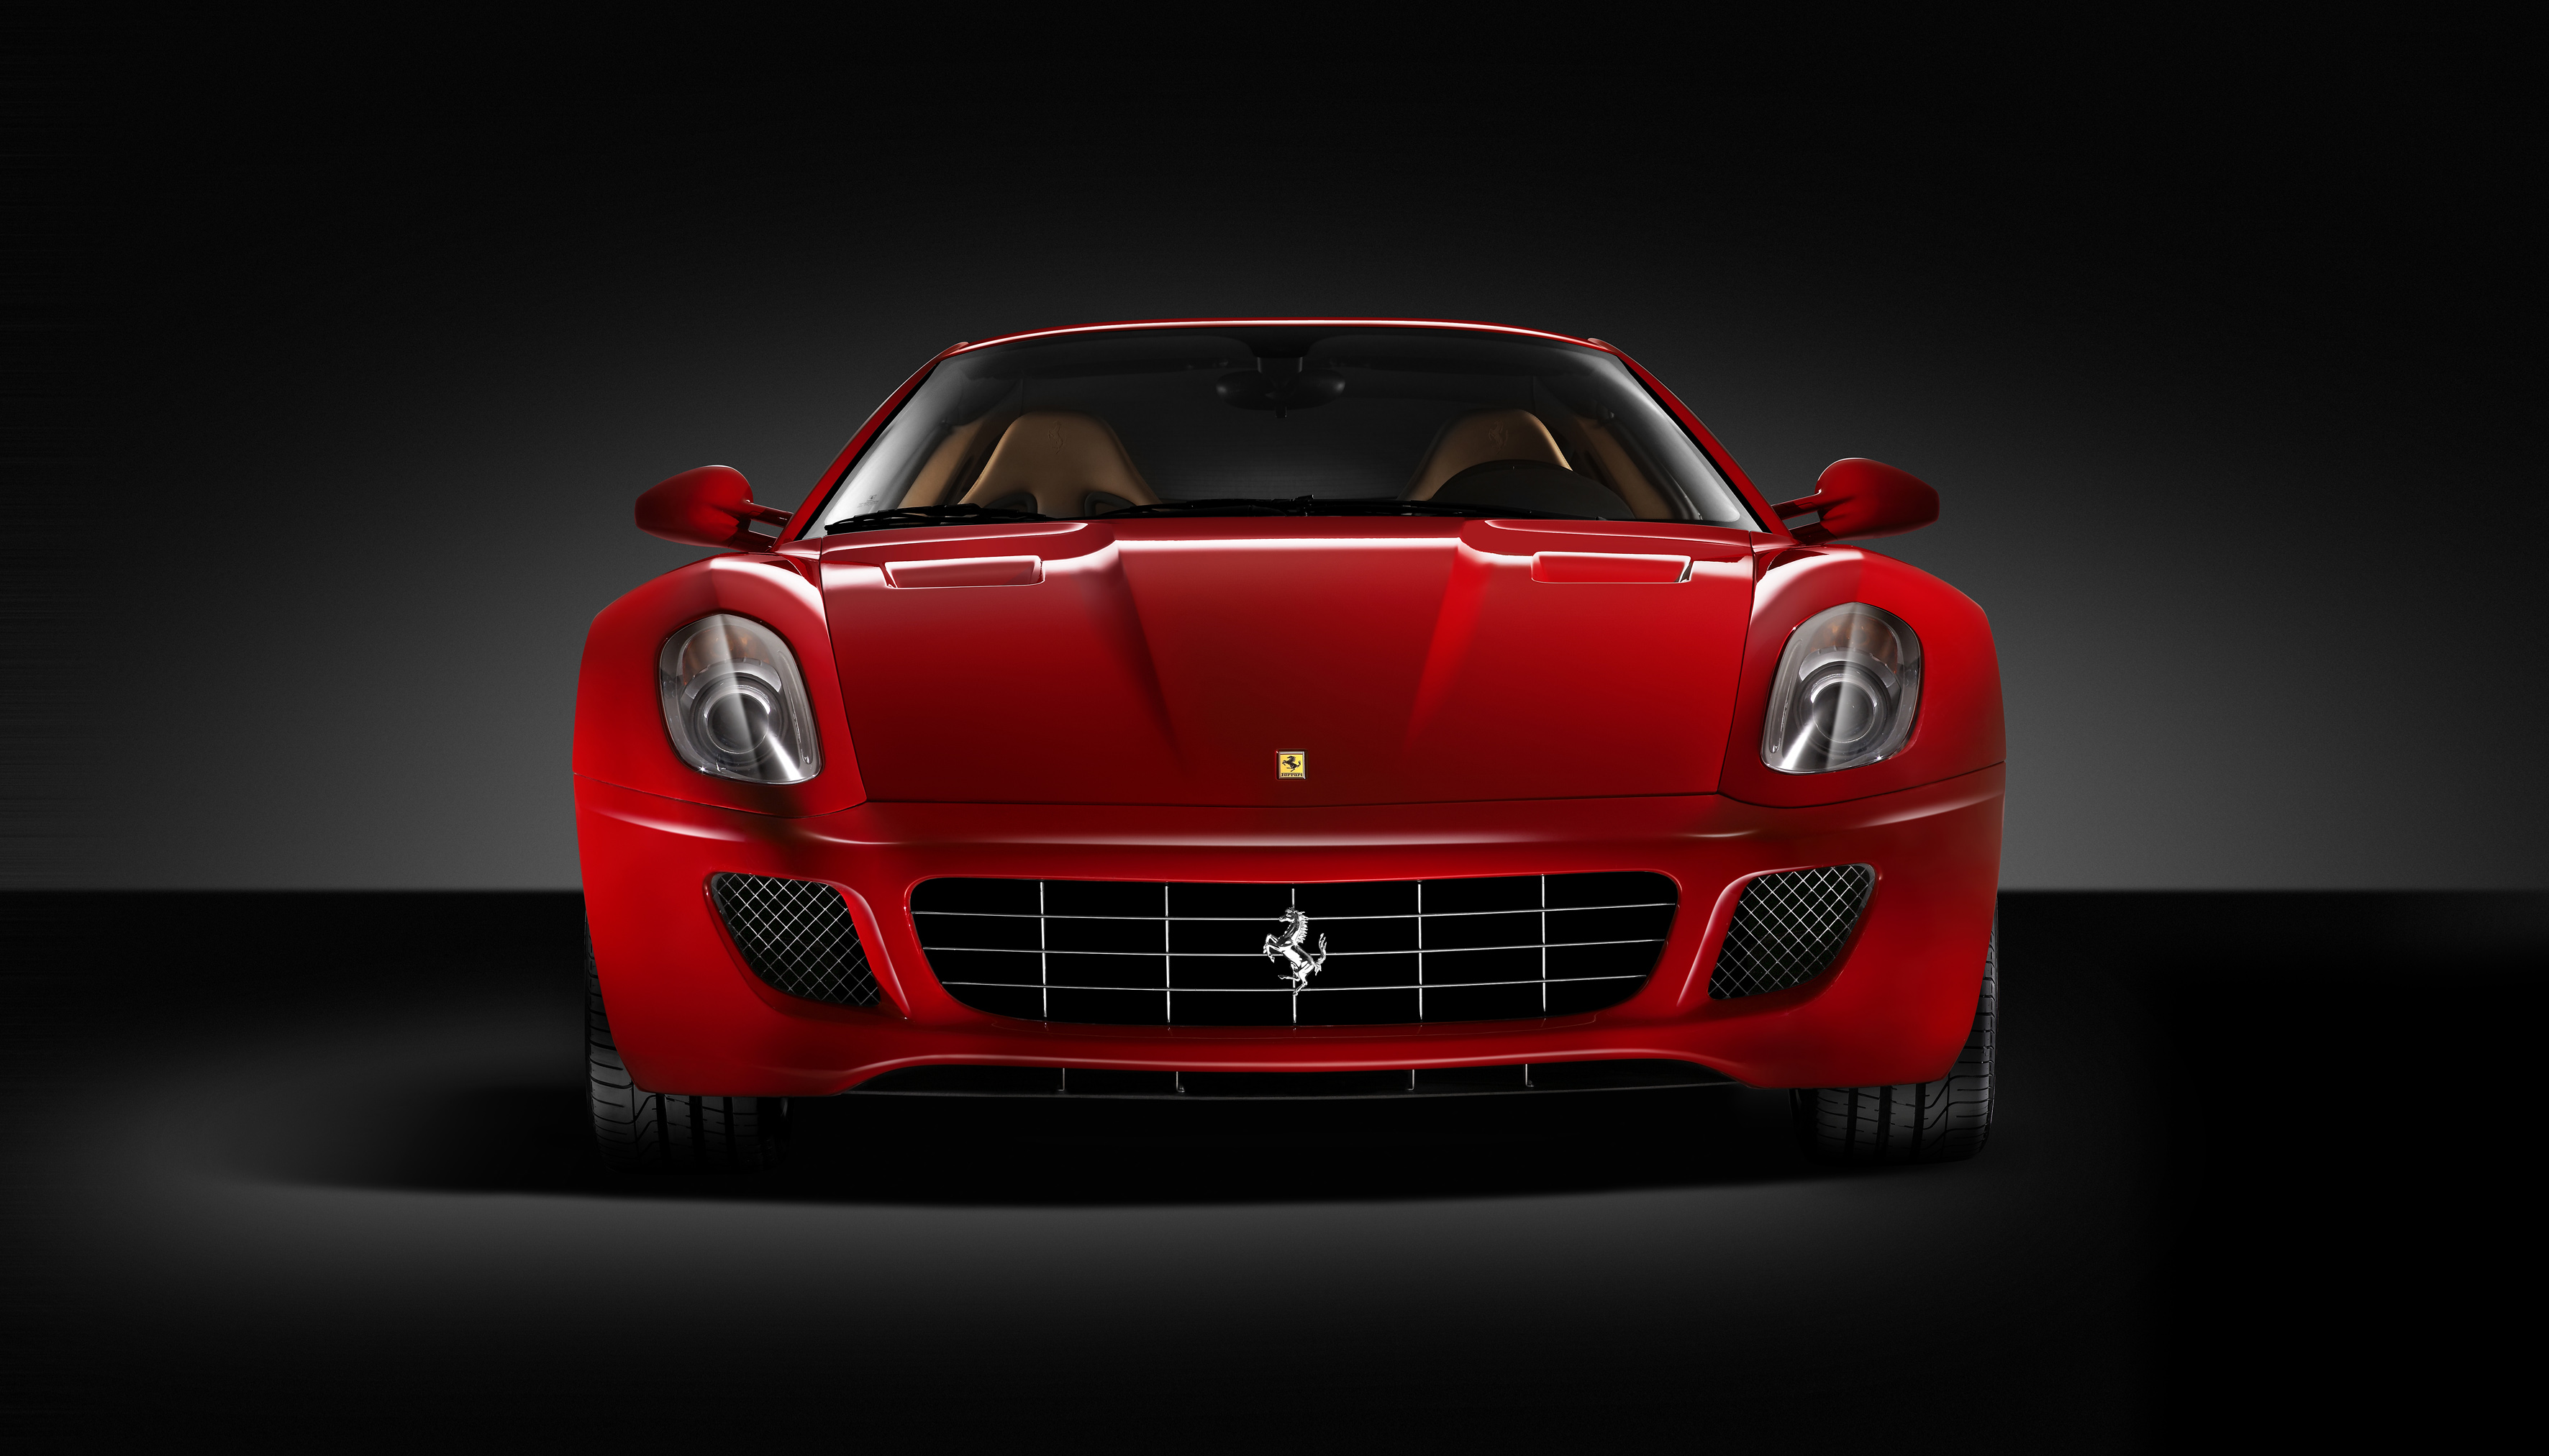 cars, Ferrari, red cars - desktop wallpaper